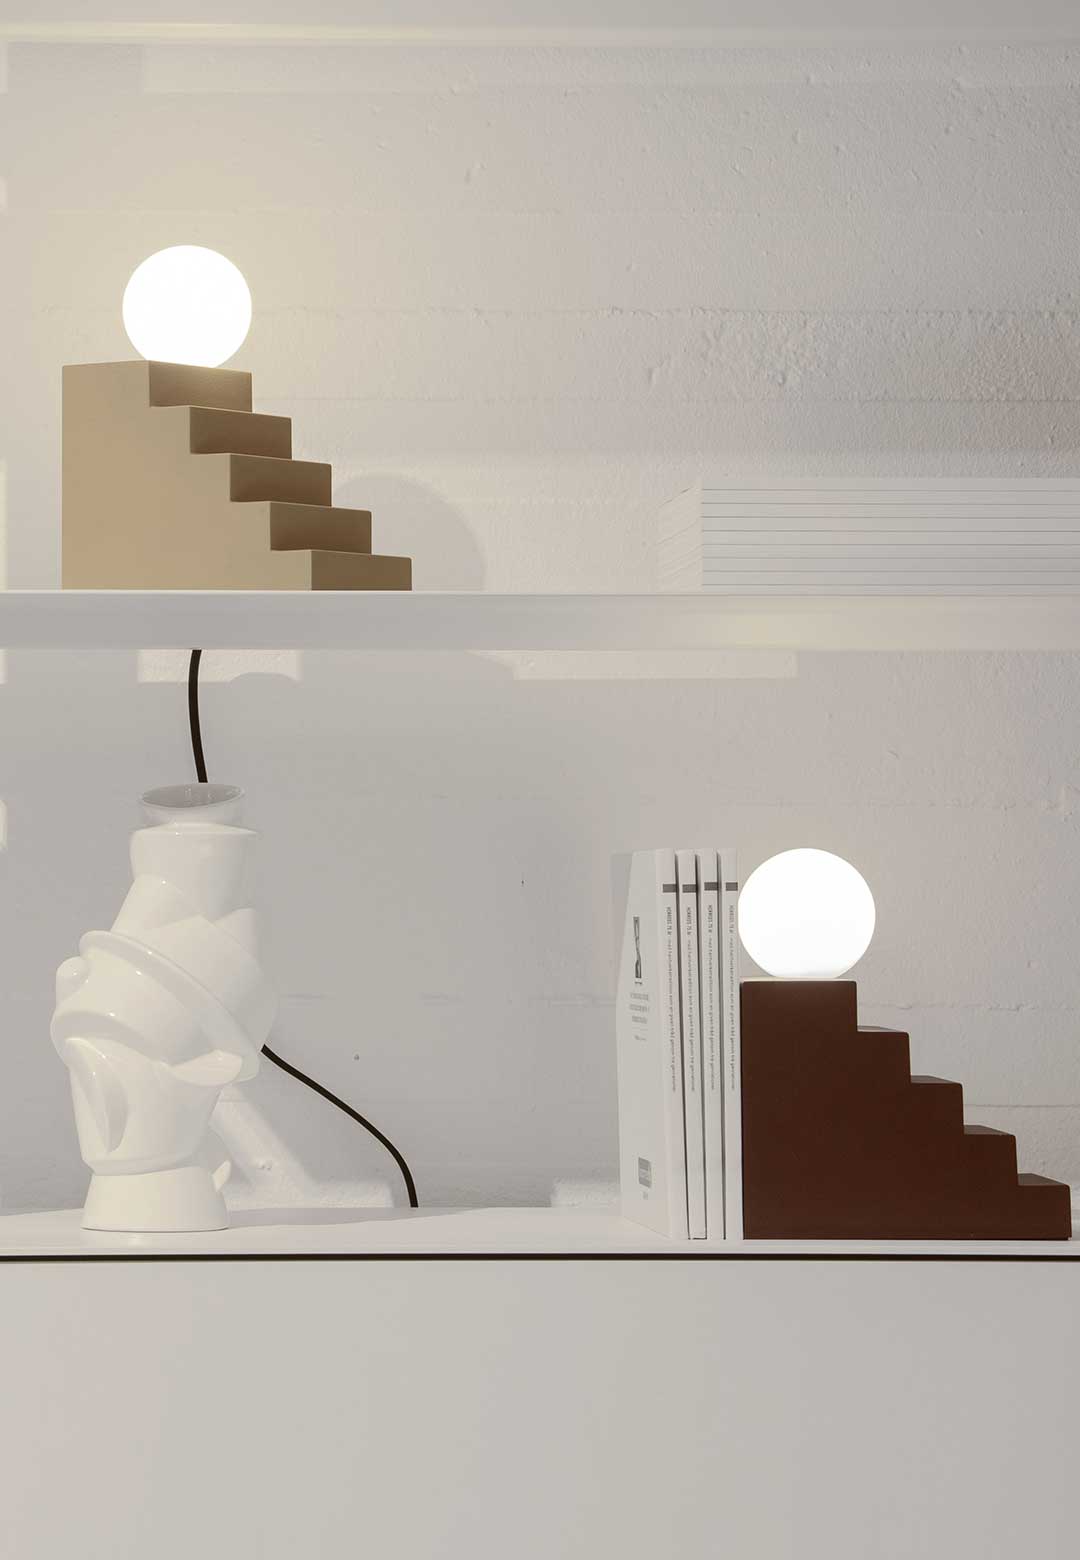 Notchi Architects x Oblure unveil Stair Lamp that evokes childlike wonder